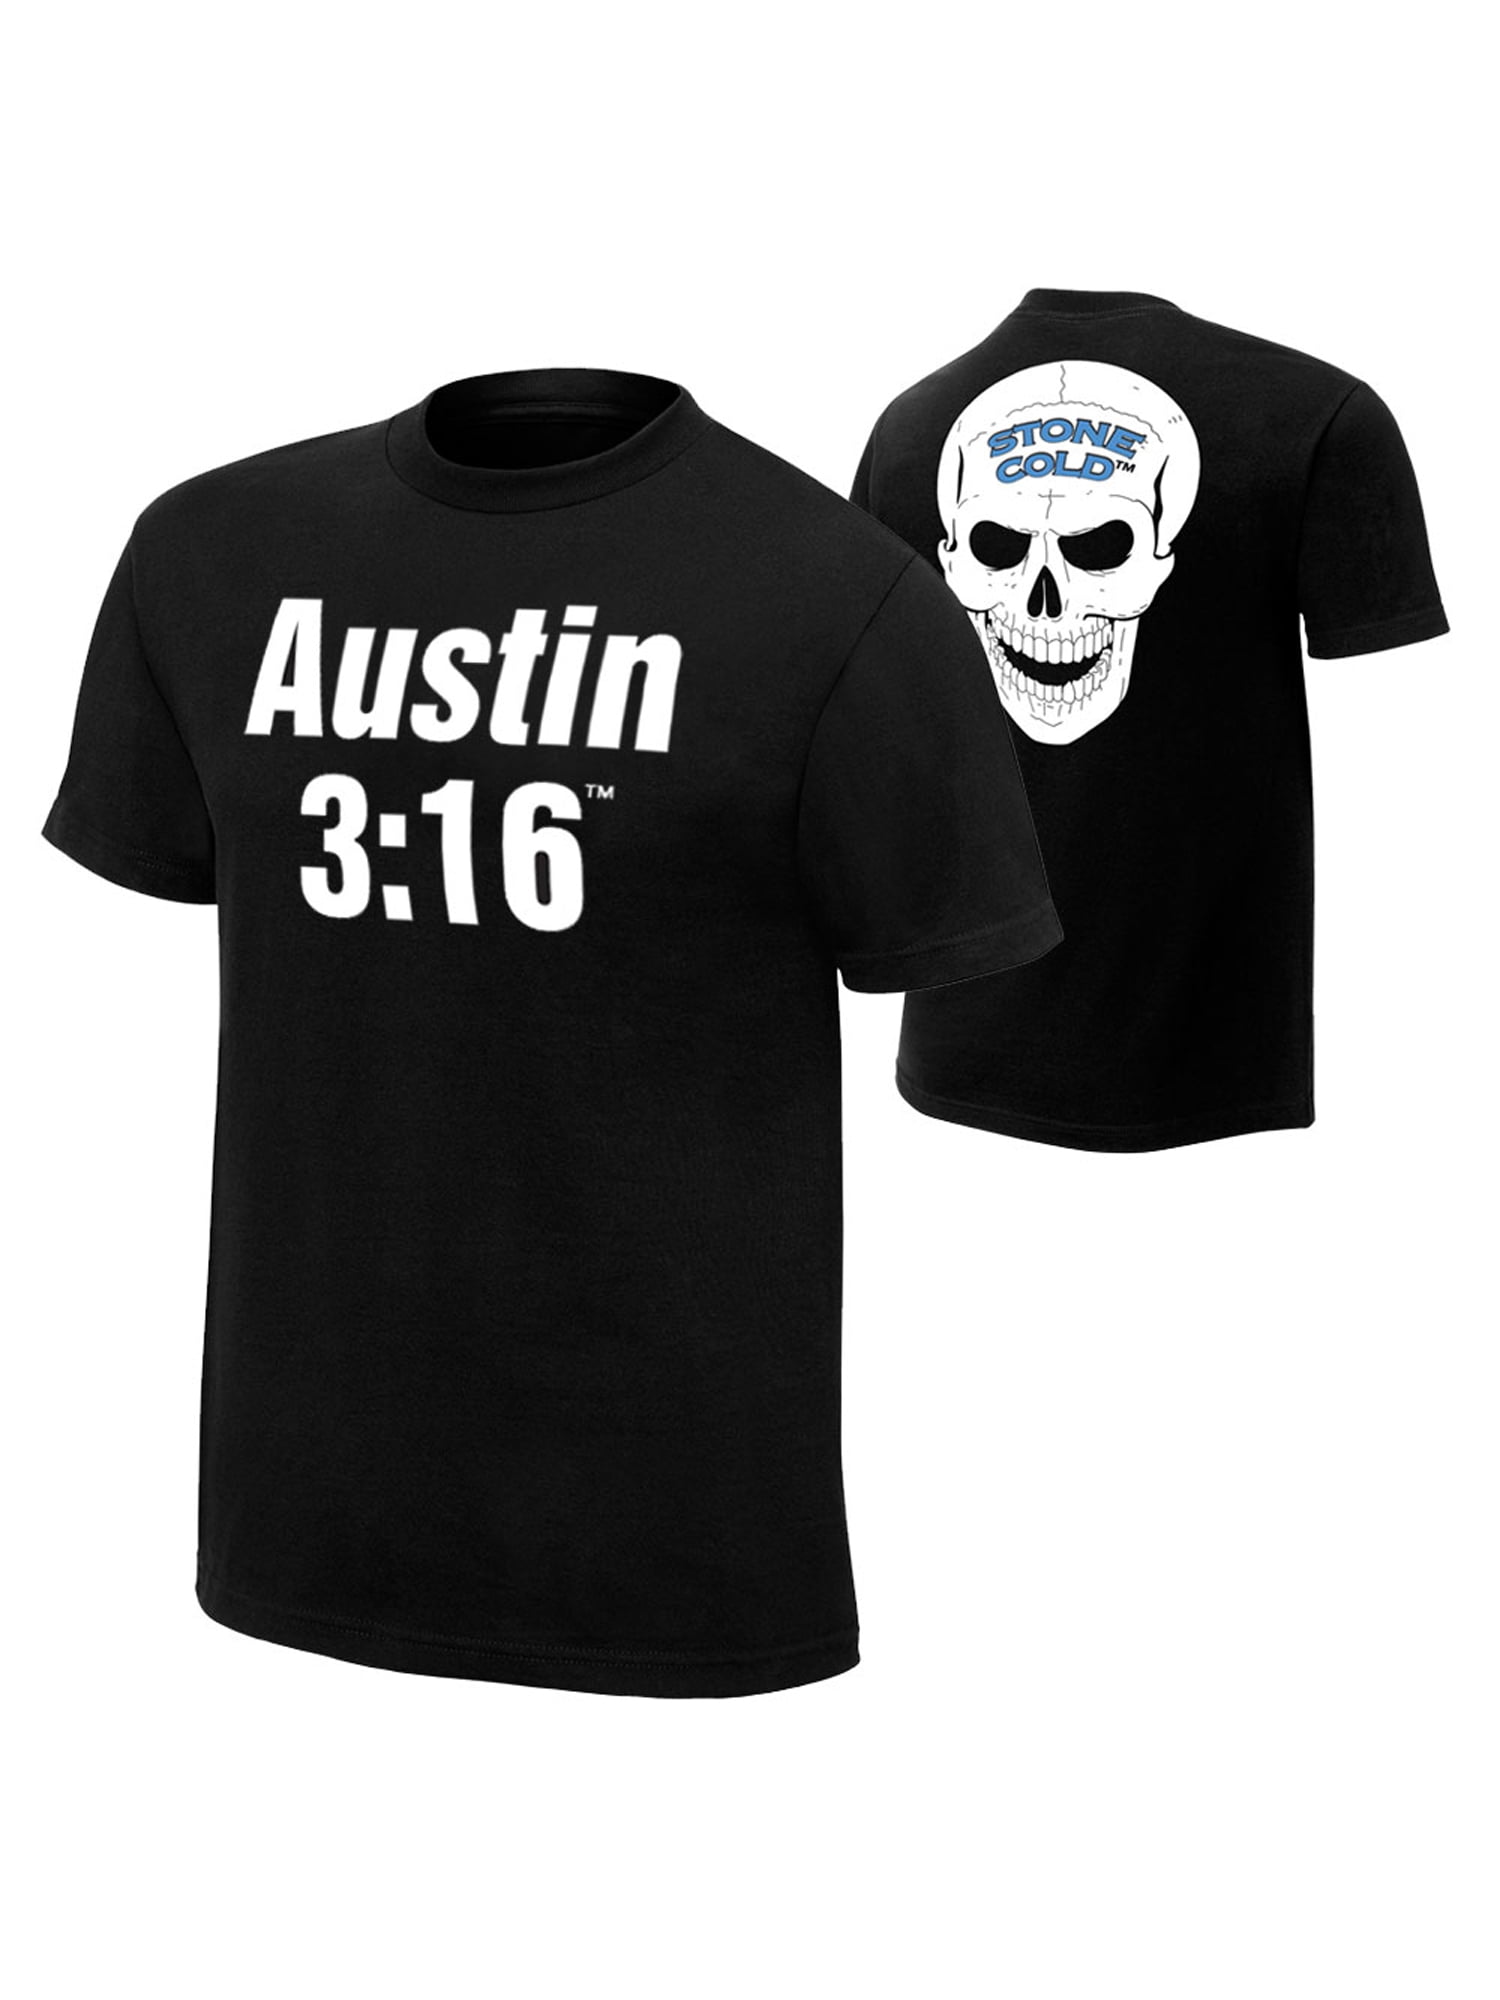 Stone Cold Steve Austin 3:16 Skull Authentic Youth Boys Black T-Shirt 